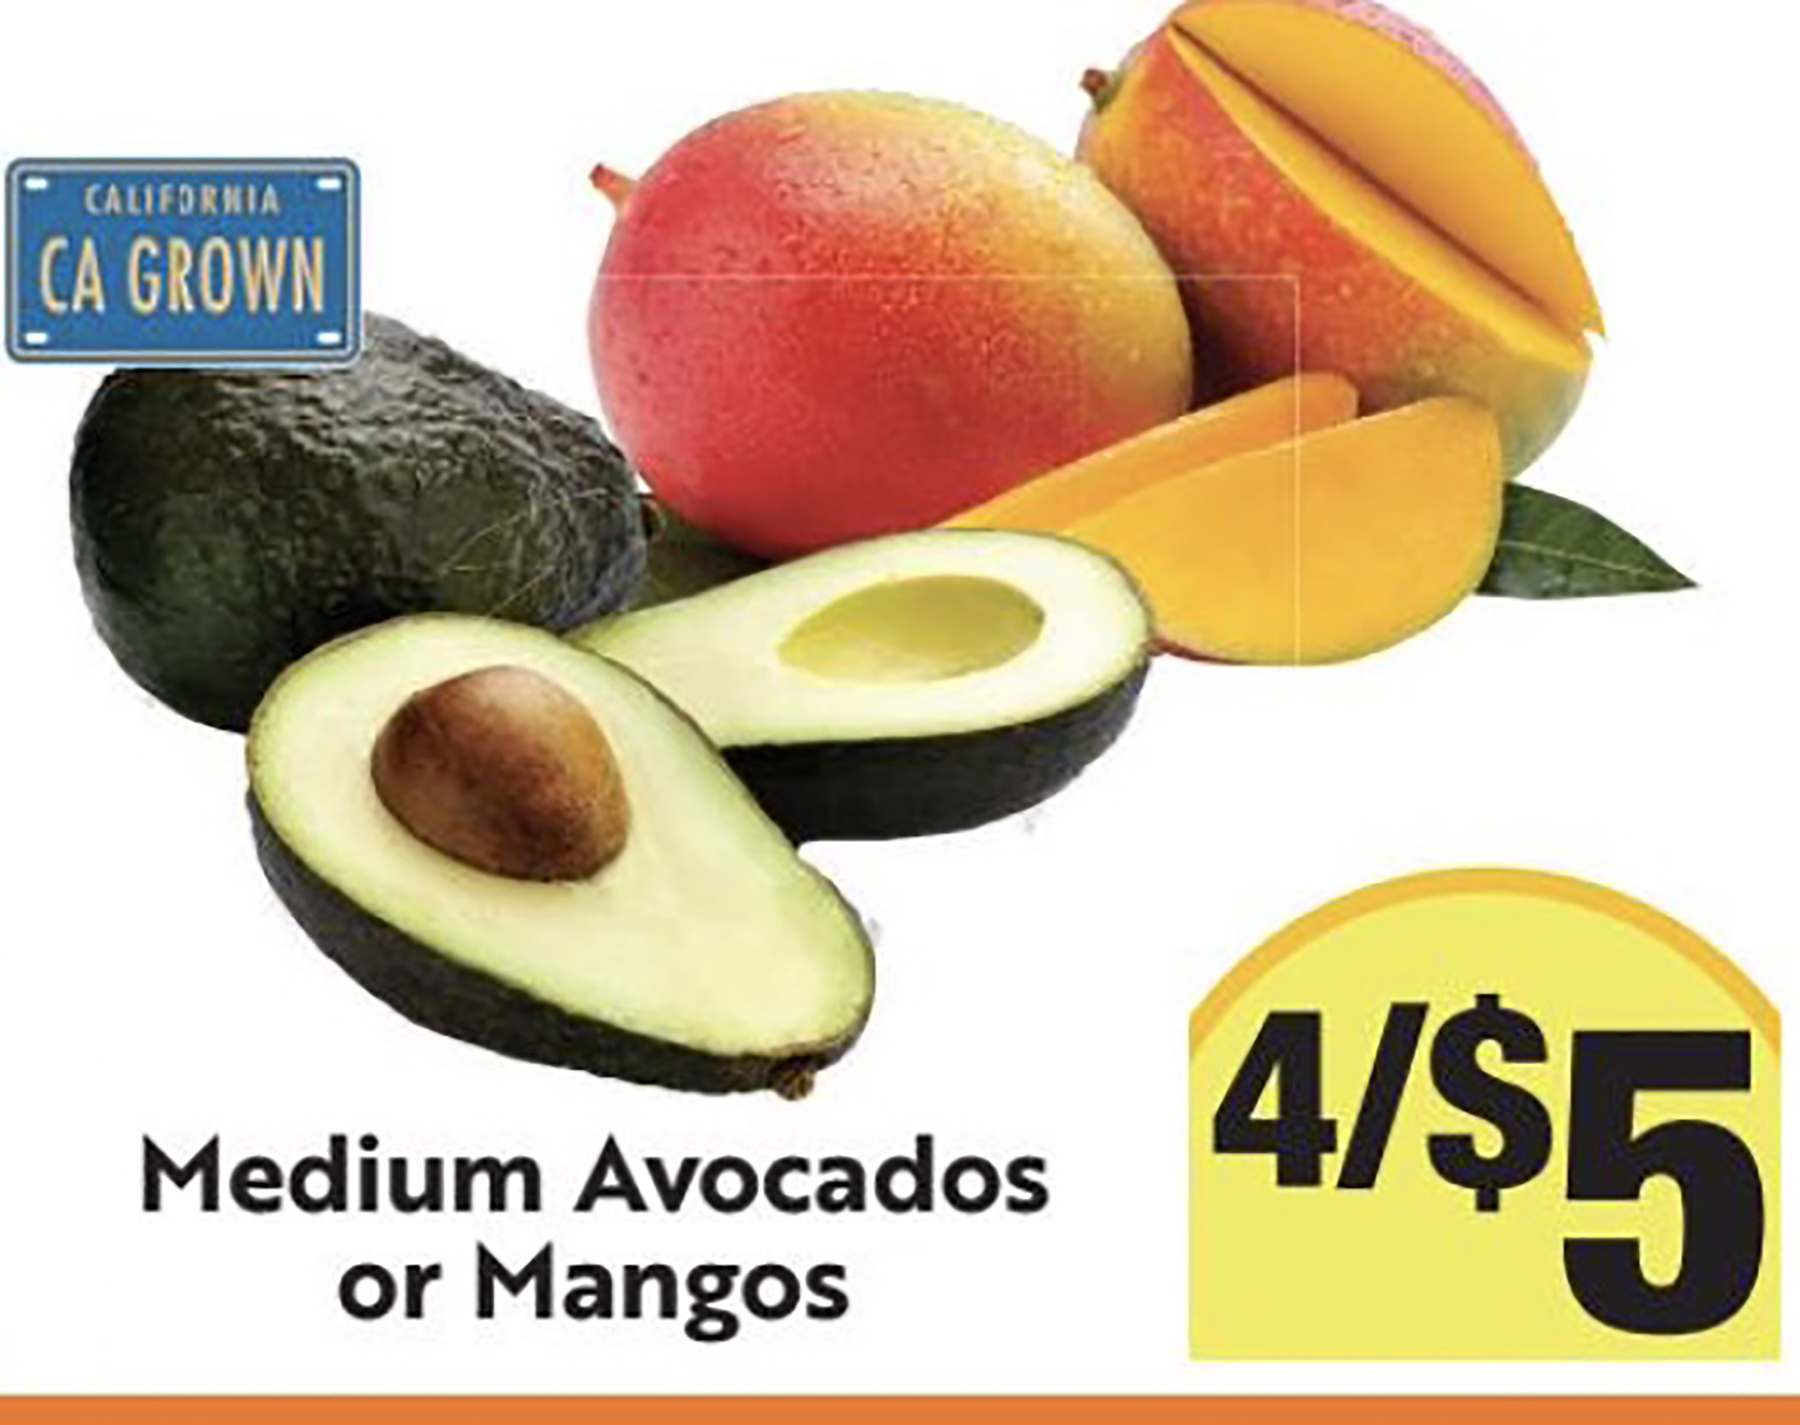 Peak Season Retail Promotions Showcase California Avocados for Summer ...